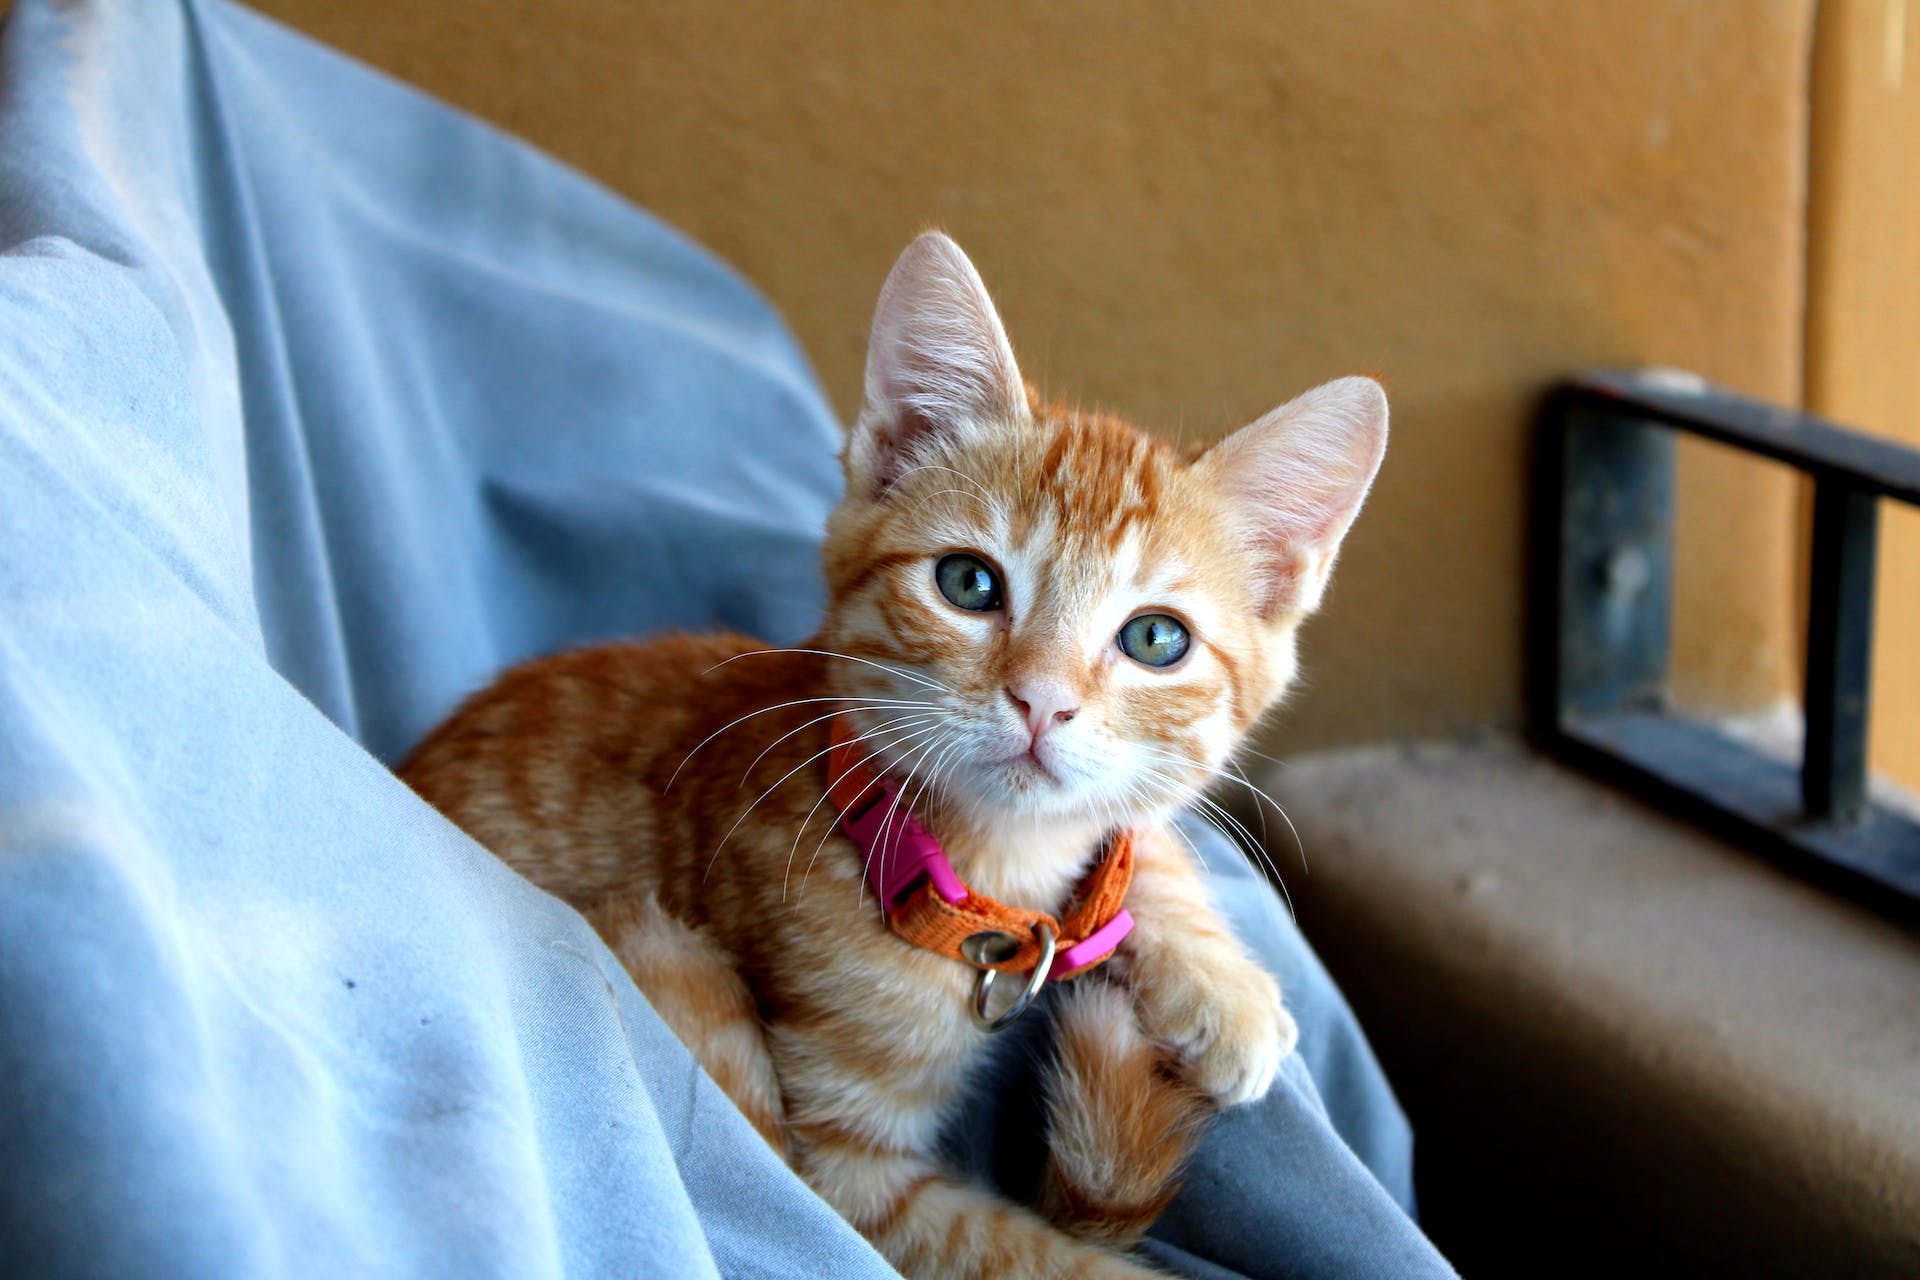 An indoor cat wearing a collar